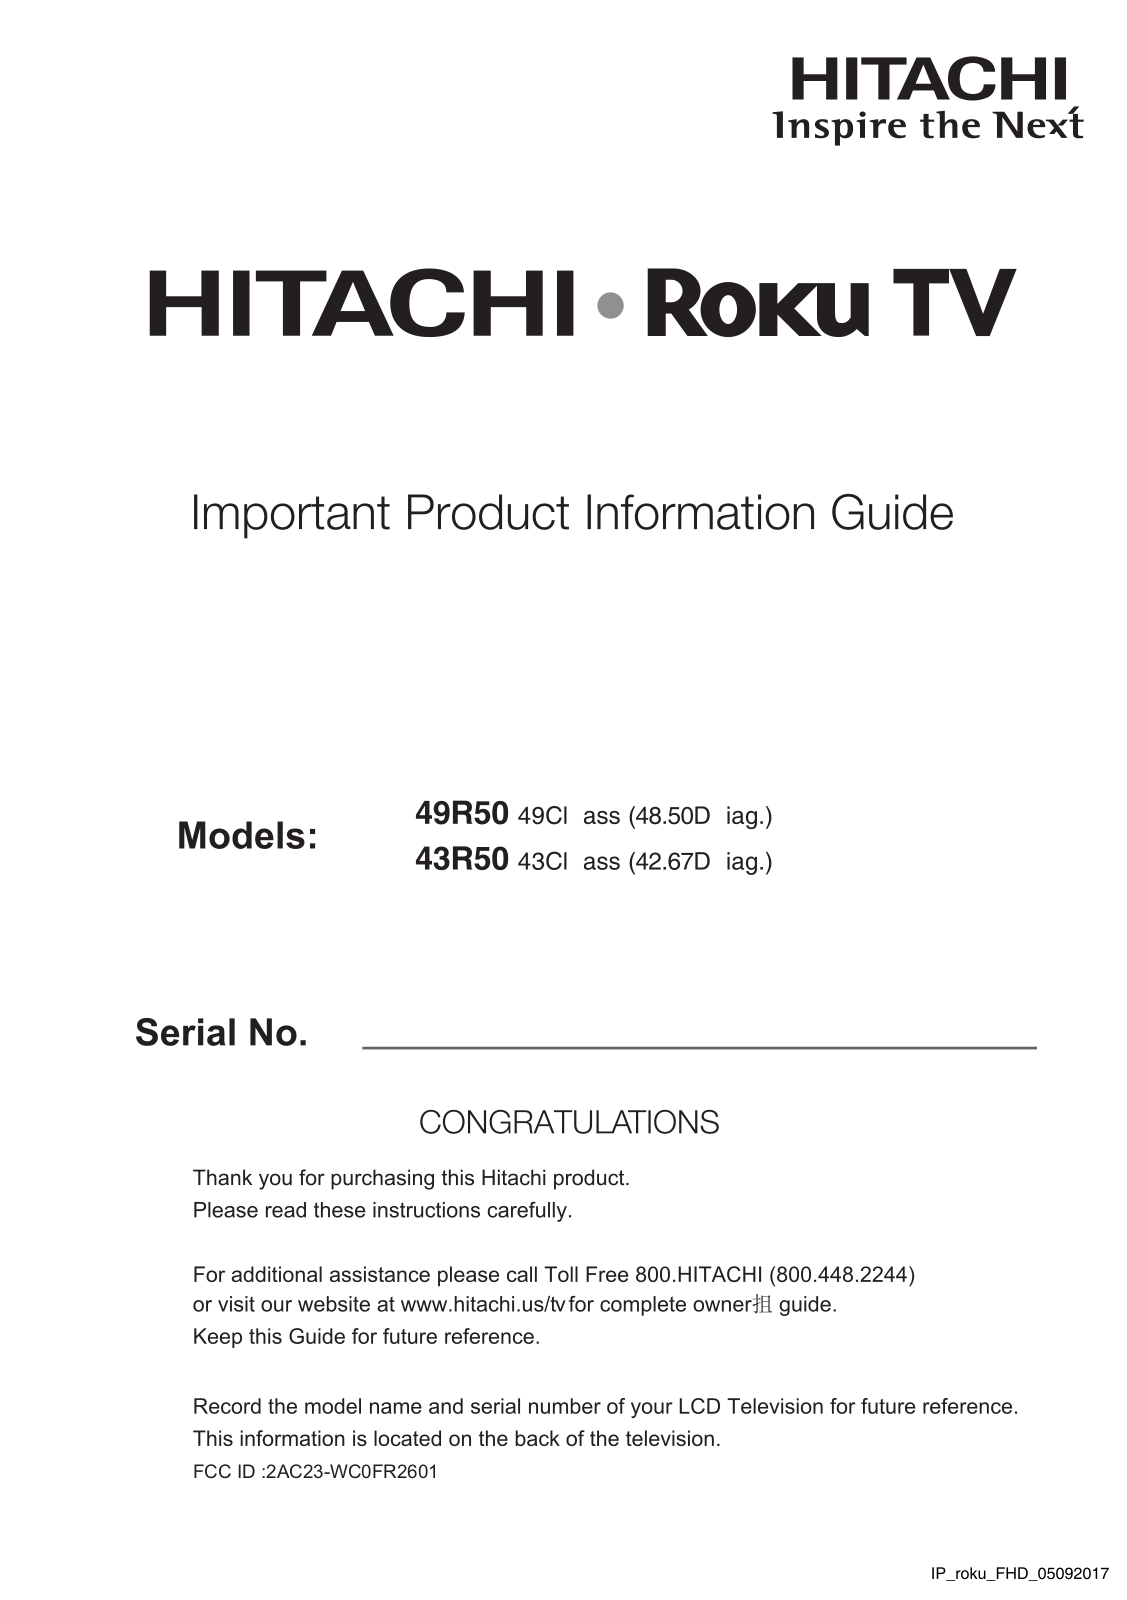 Hitachi Roku TV 43R50, Roku TV 49R50 User Manual